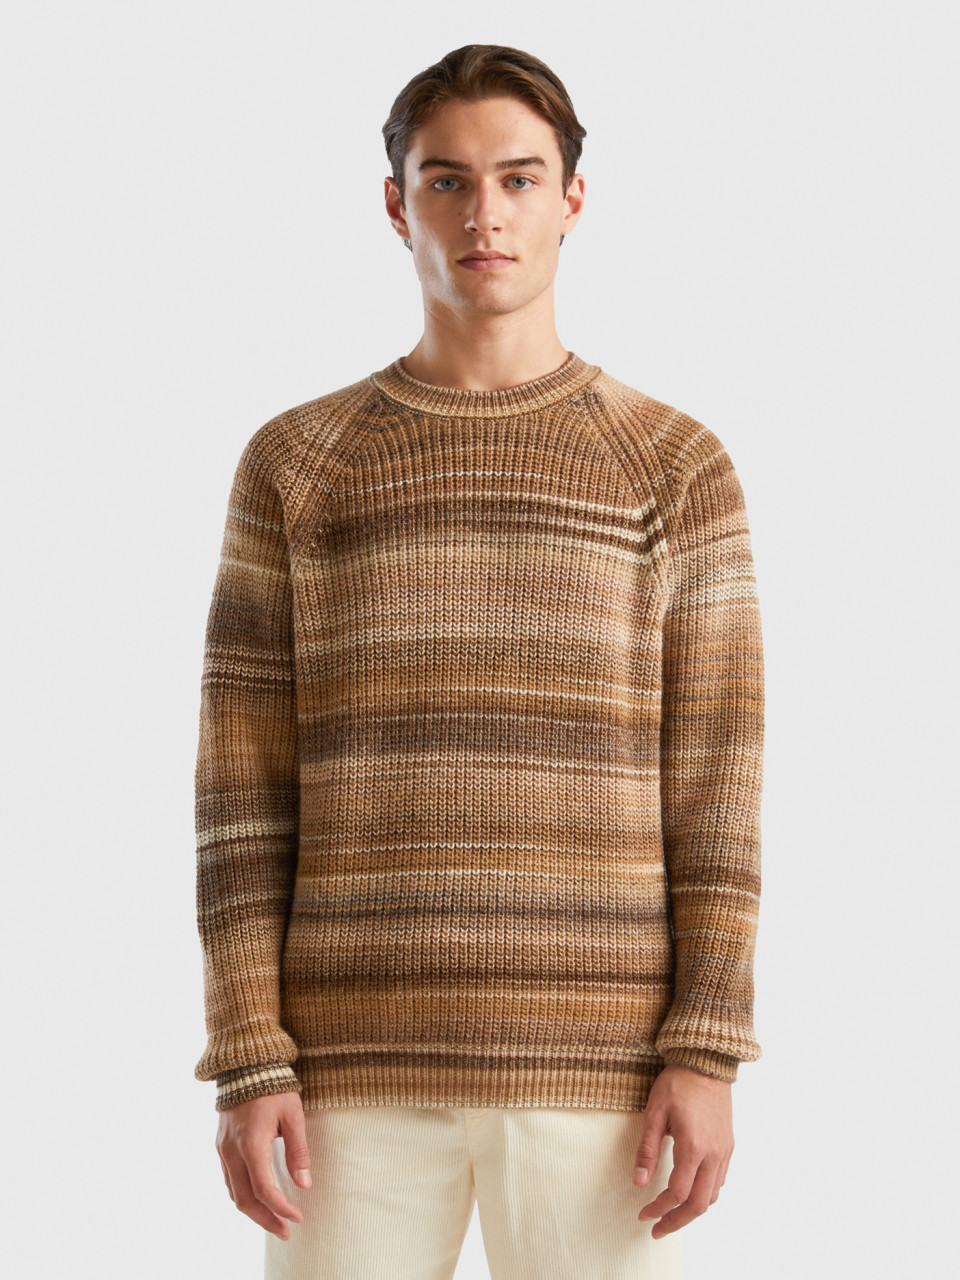 Benetton, Multicolor Sweater In Wool Blend, Multi-color, Men